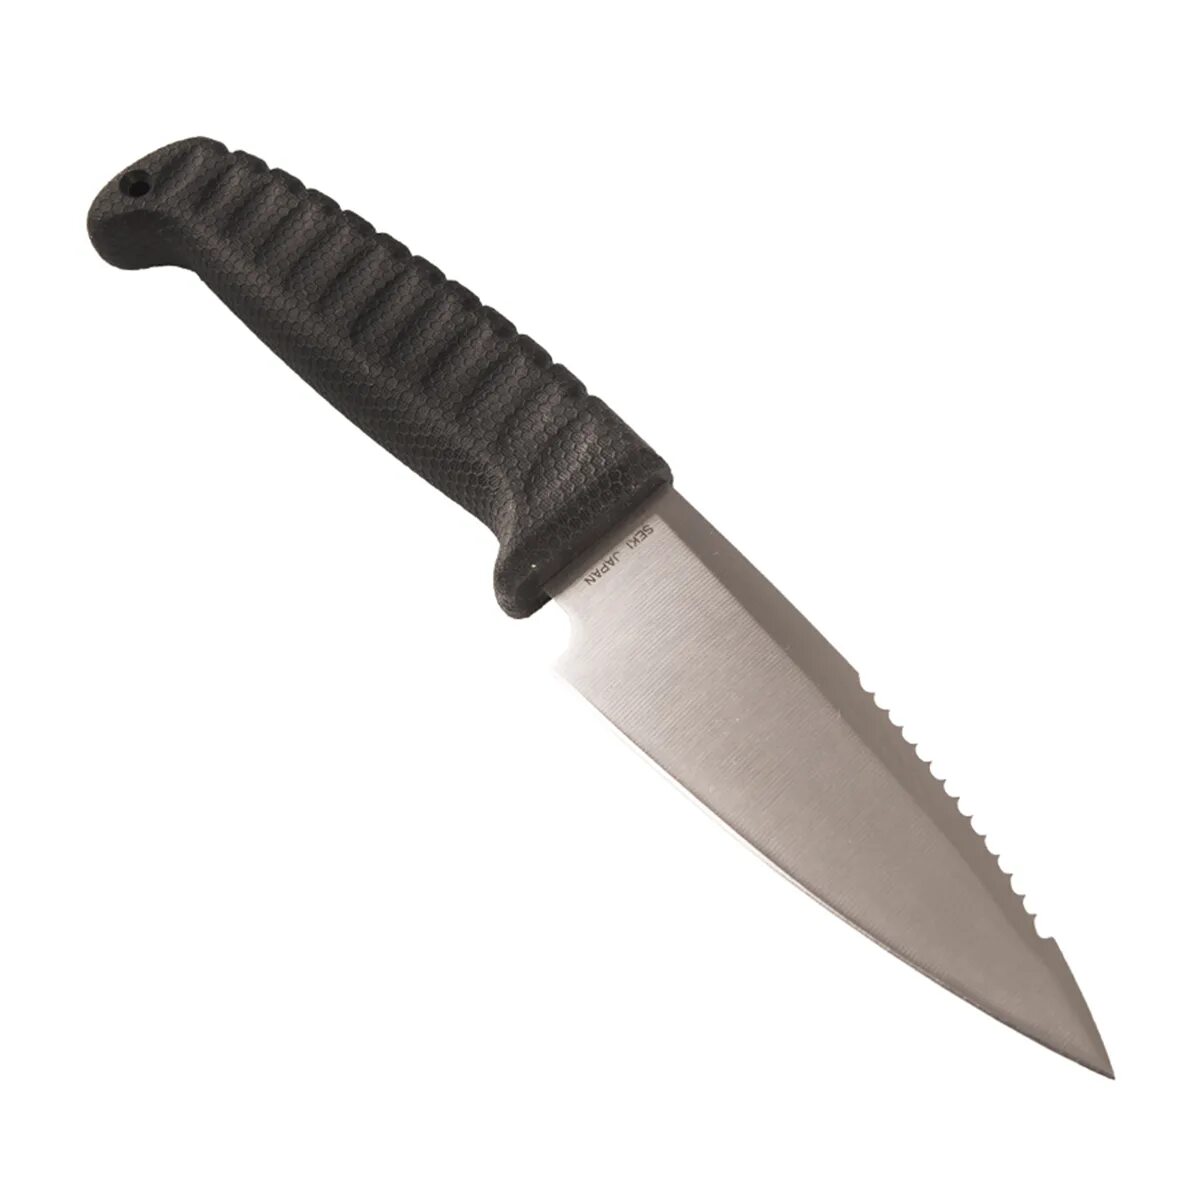 Ножи 110 мм. Нож Mini g.Sakai GS-10846. G Sakai ножи. Нож Bosen g.Sakai. Нож q Sakai рыболовный.